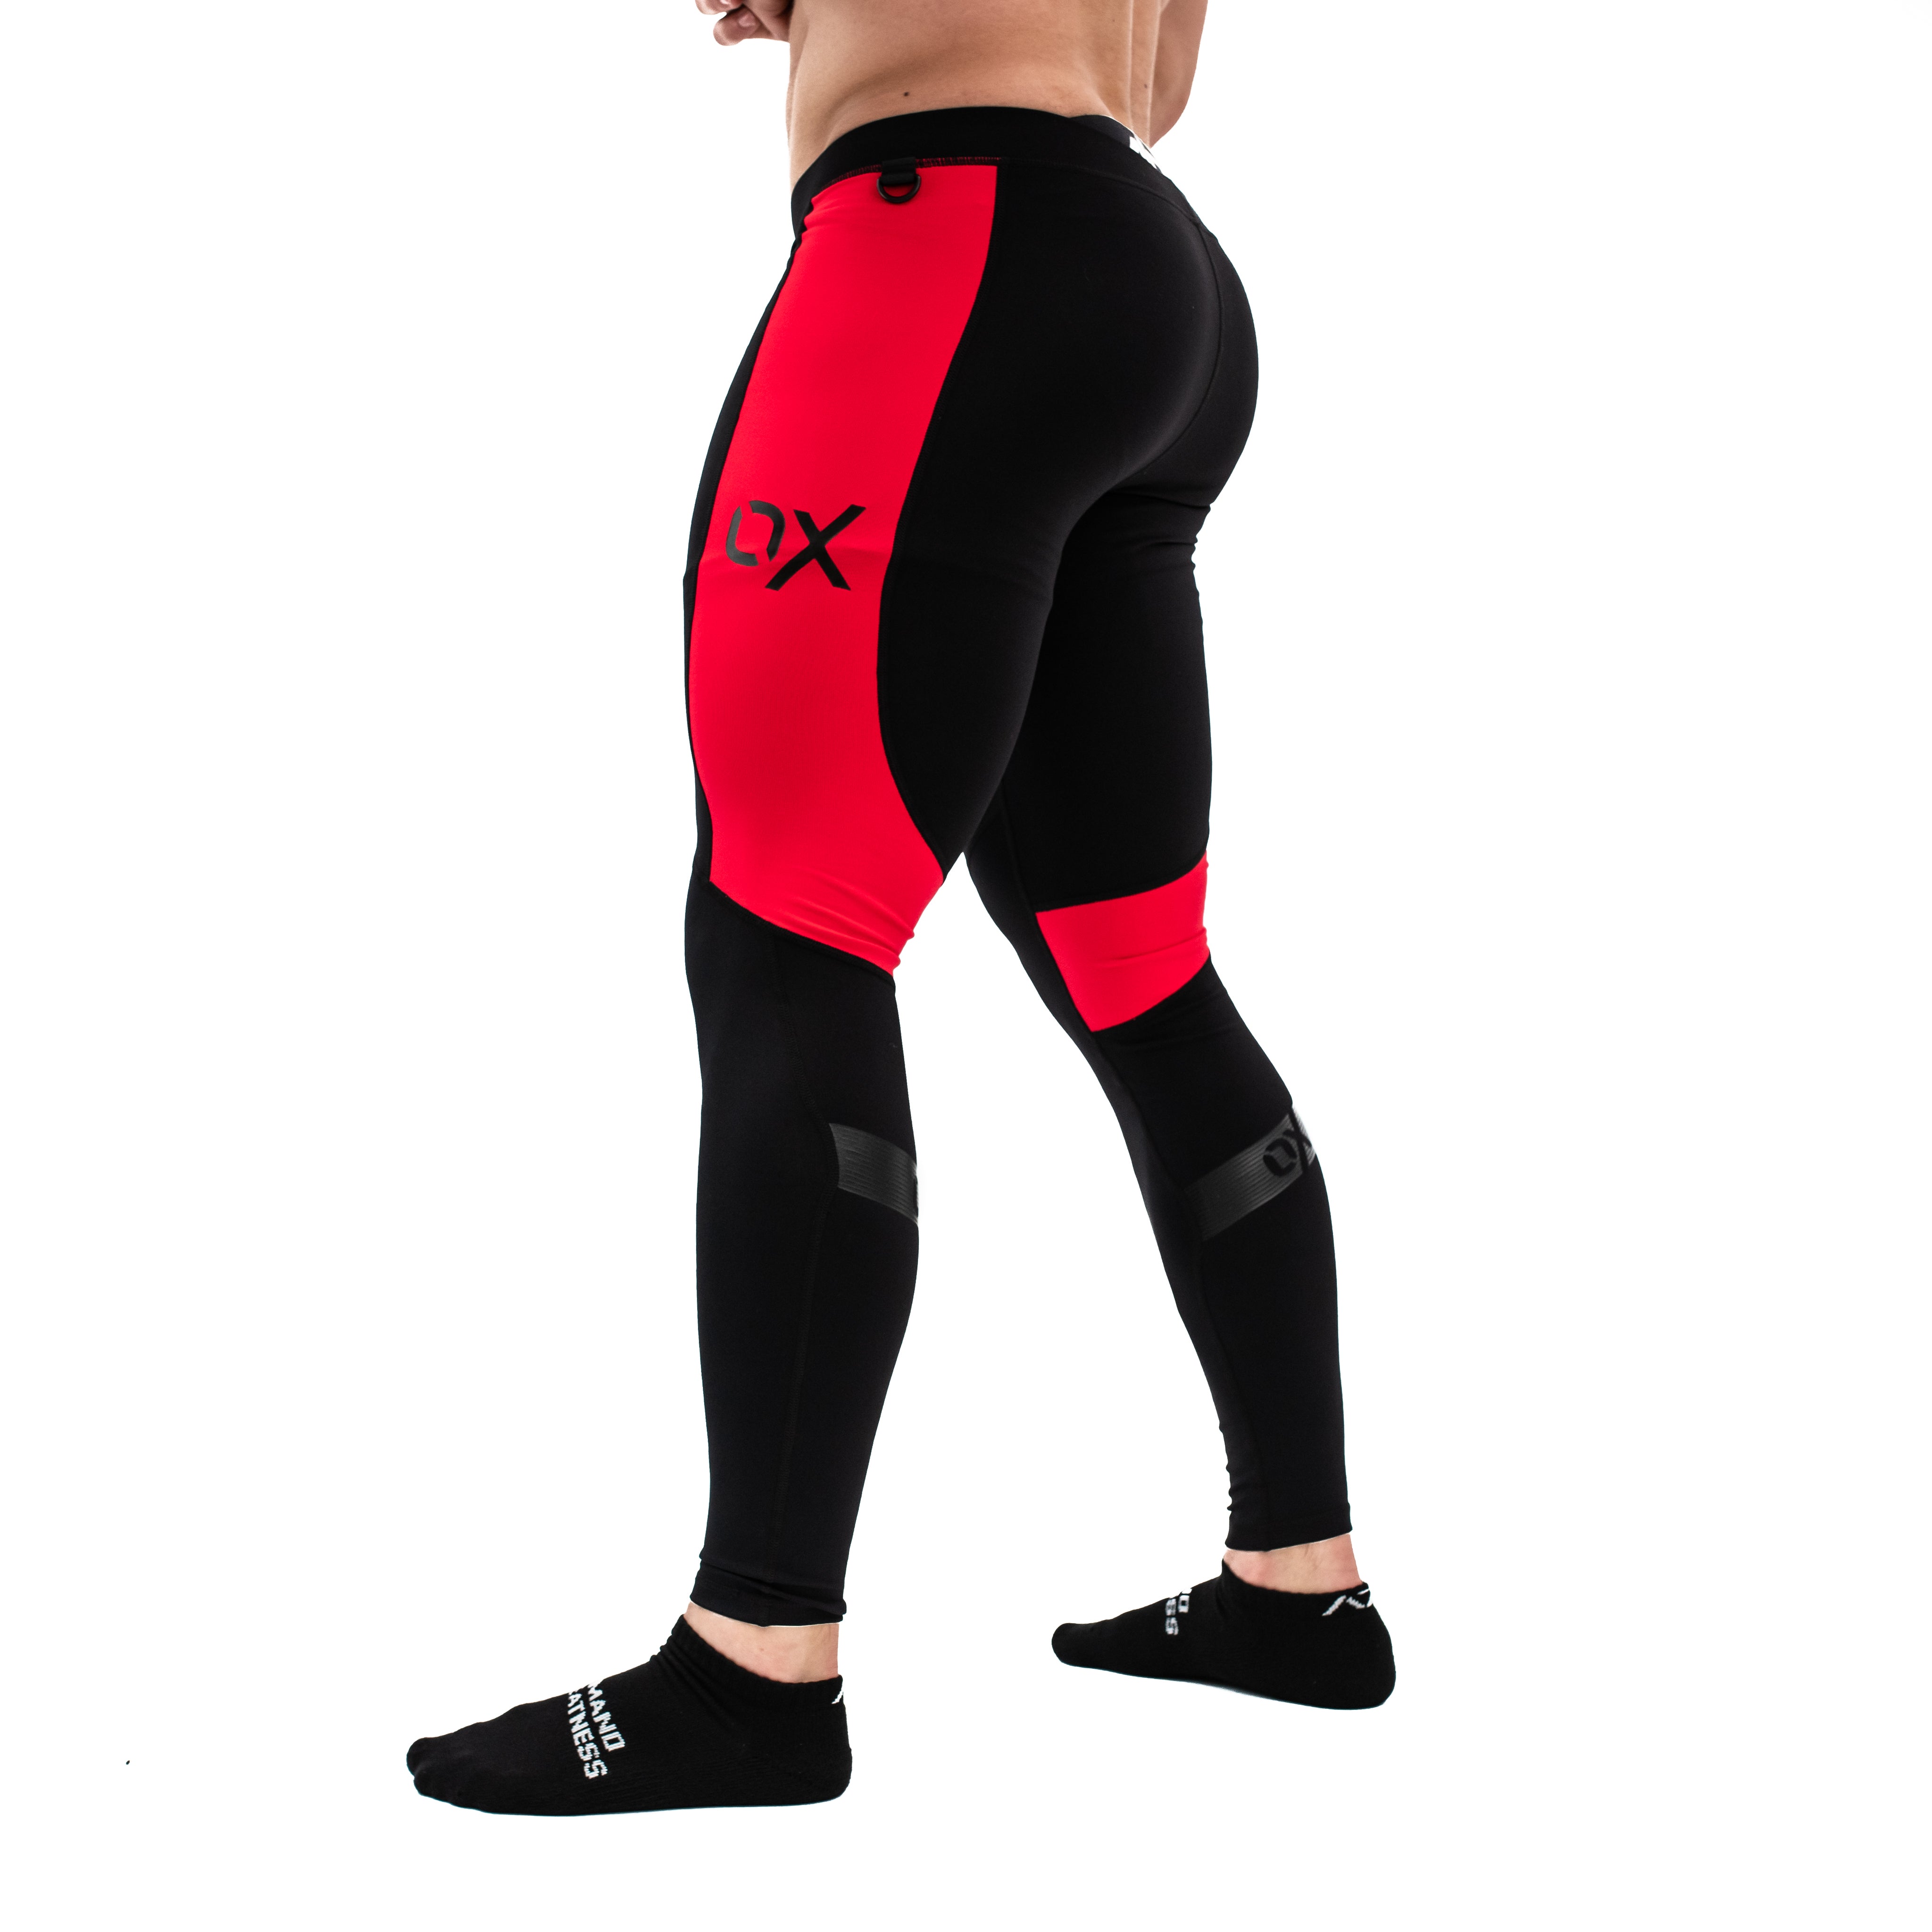 OX Men's Workout Compression Pants - Ember